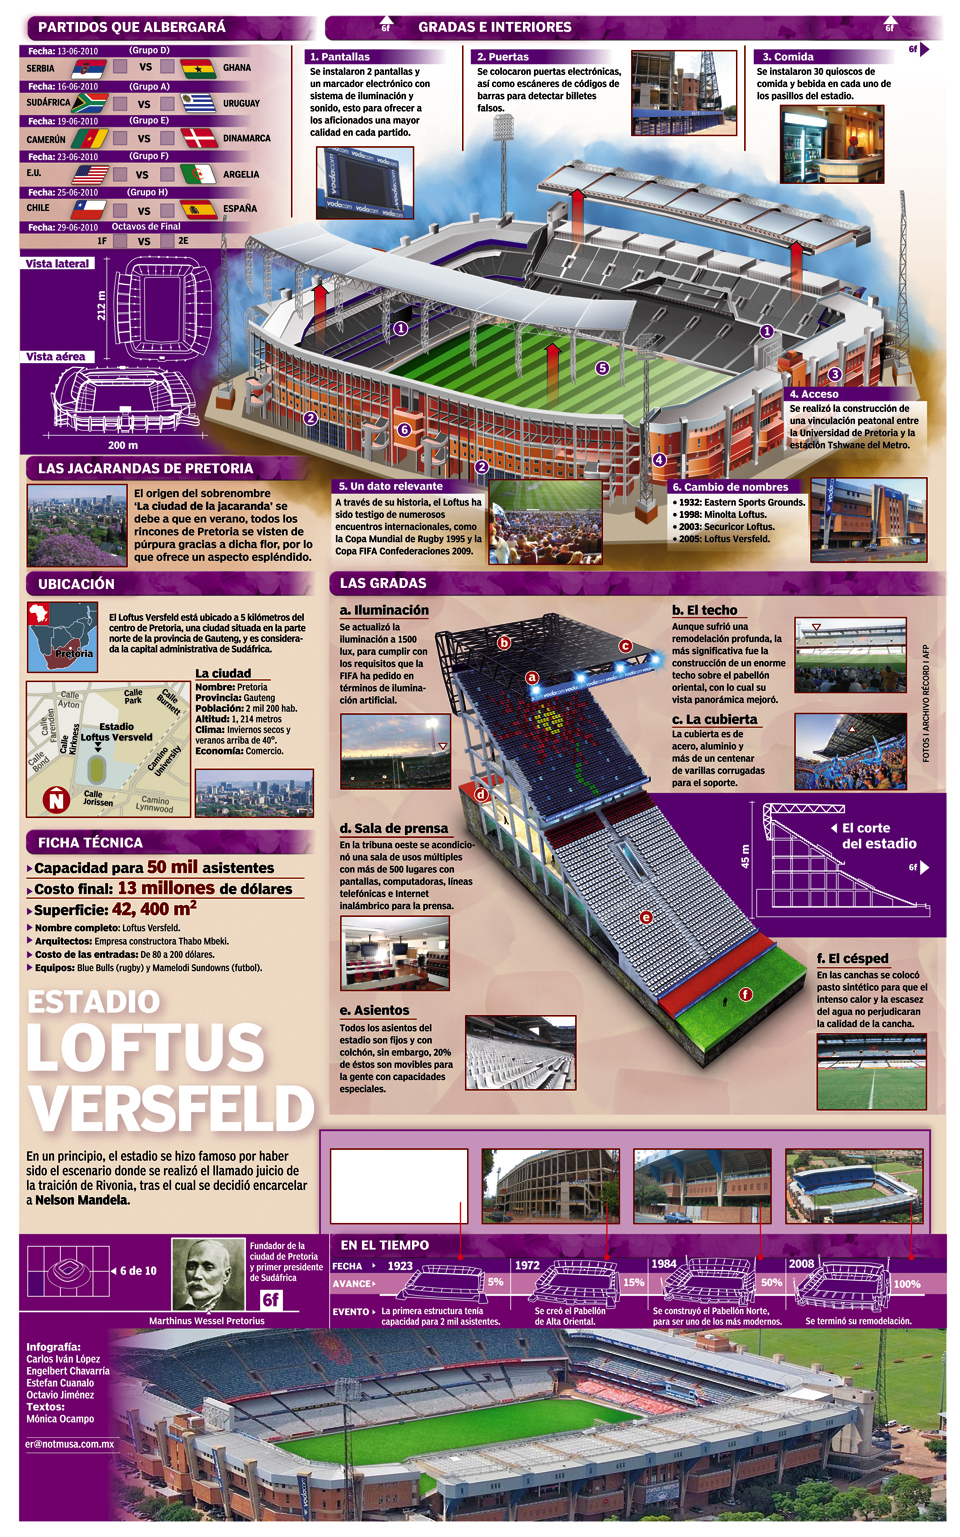 Estadio Loftus Versfield